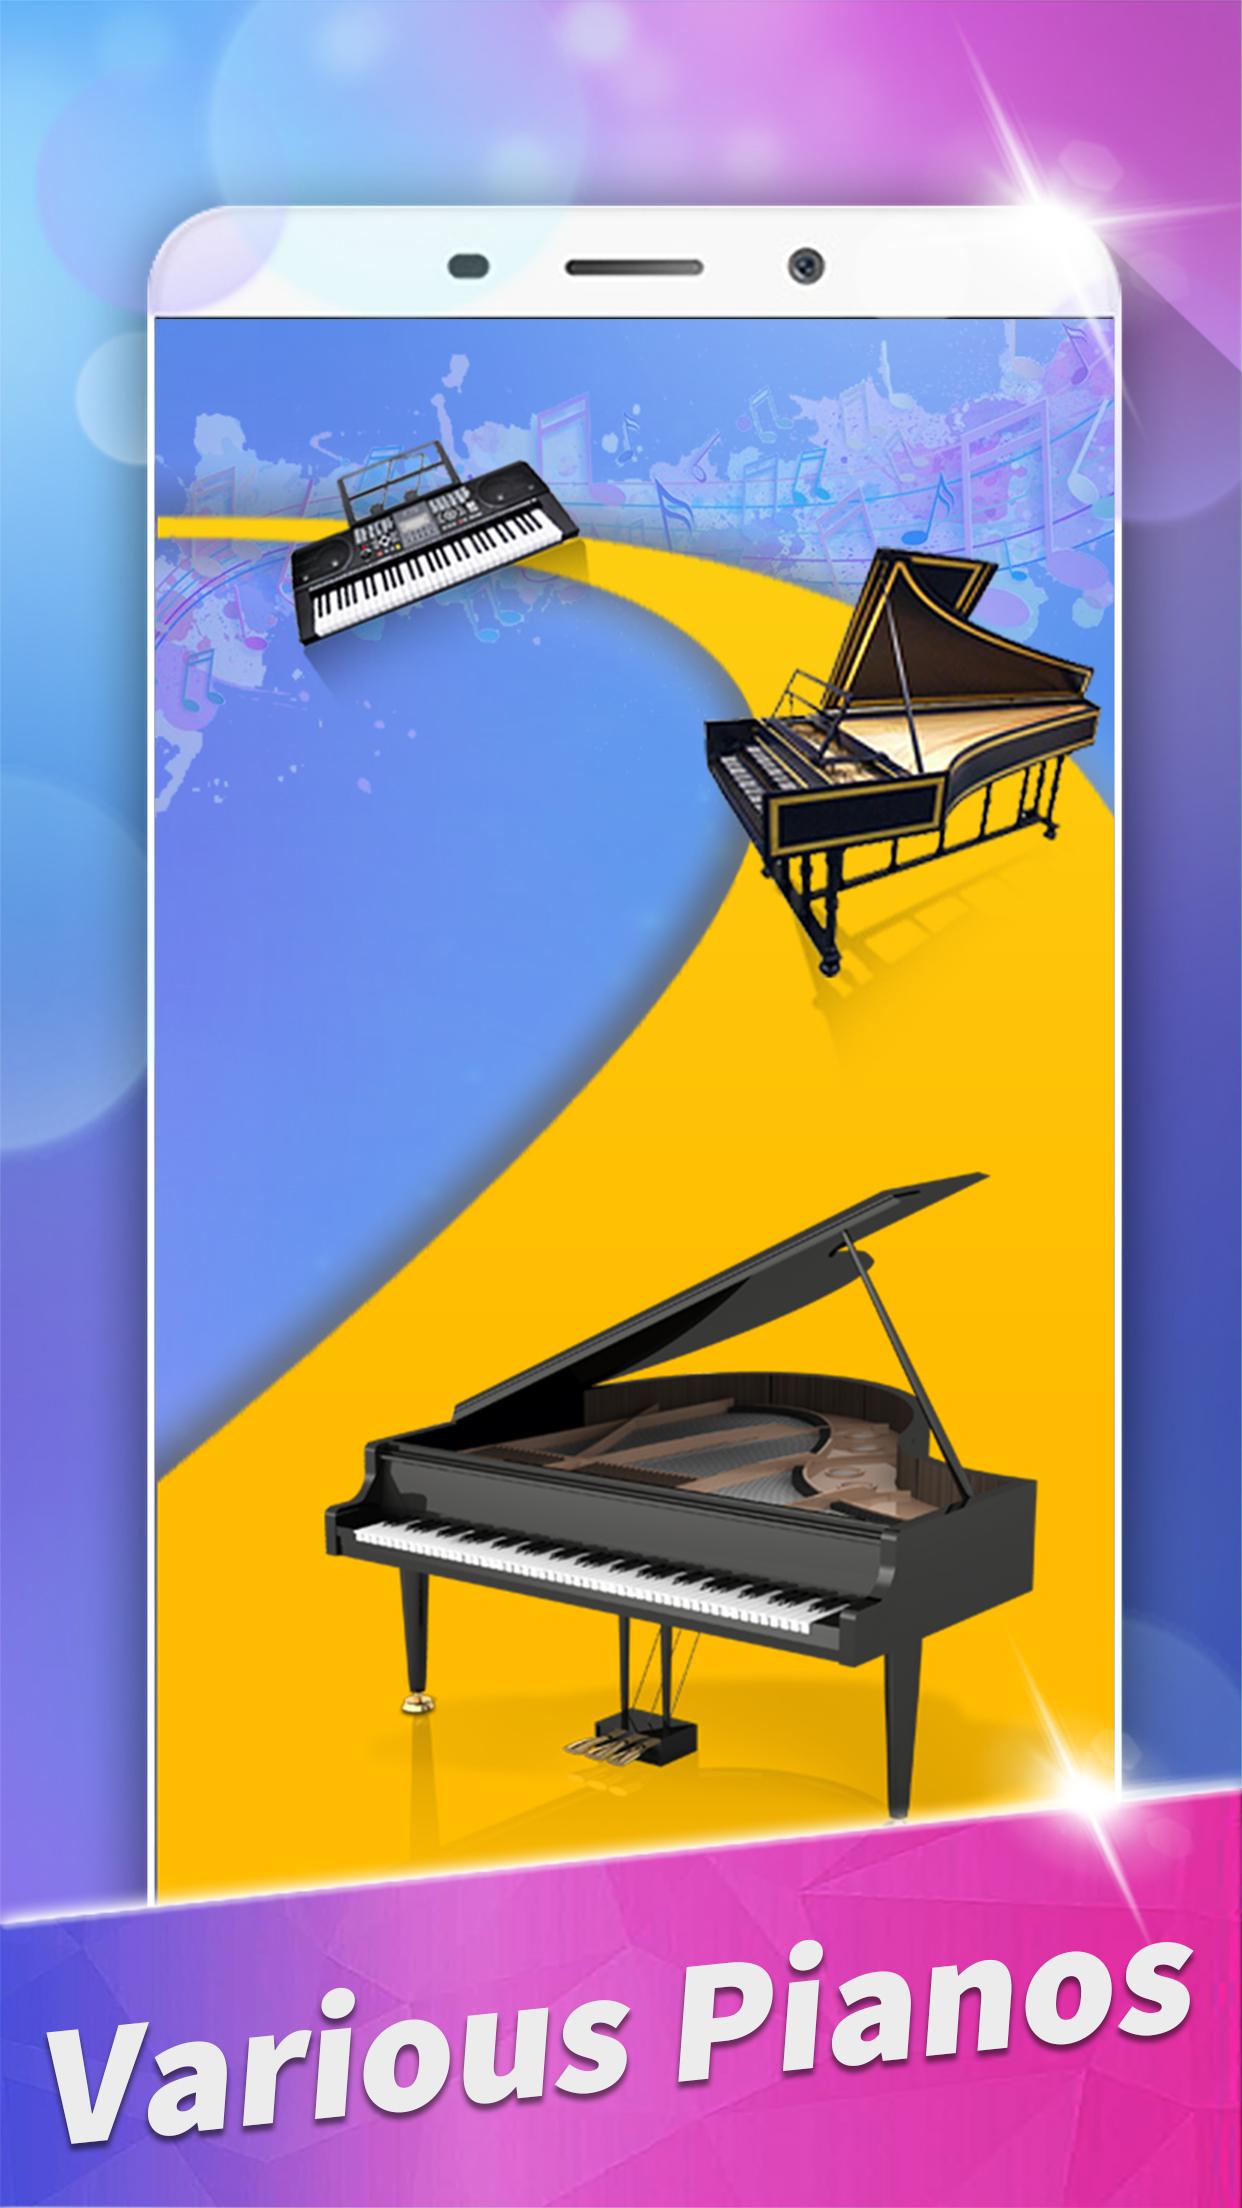 Magic Piano Tiles 2019: Pop Song - Free Music Game APK 2.23 for Android –  Download Magic Piano Tiles 2019: Pop Song - Free Music Game APK Latest  Version from APKFab.com